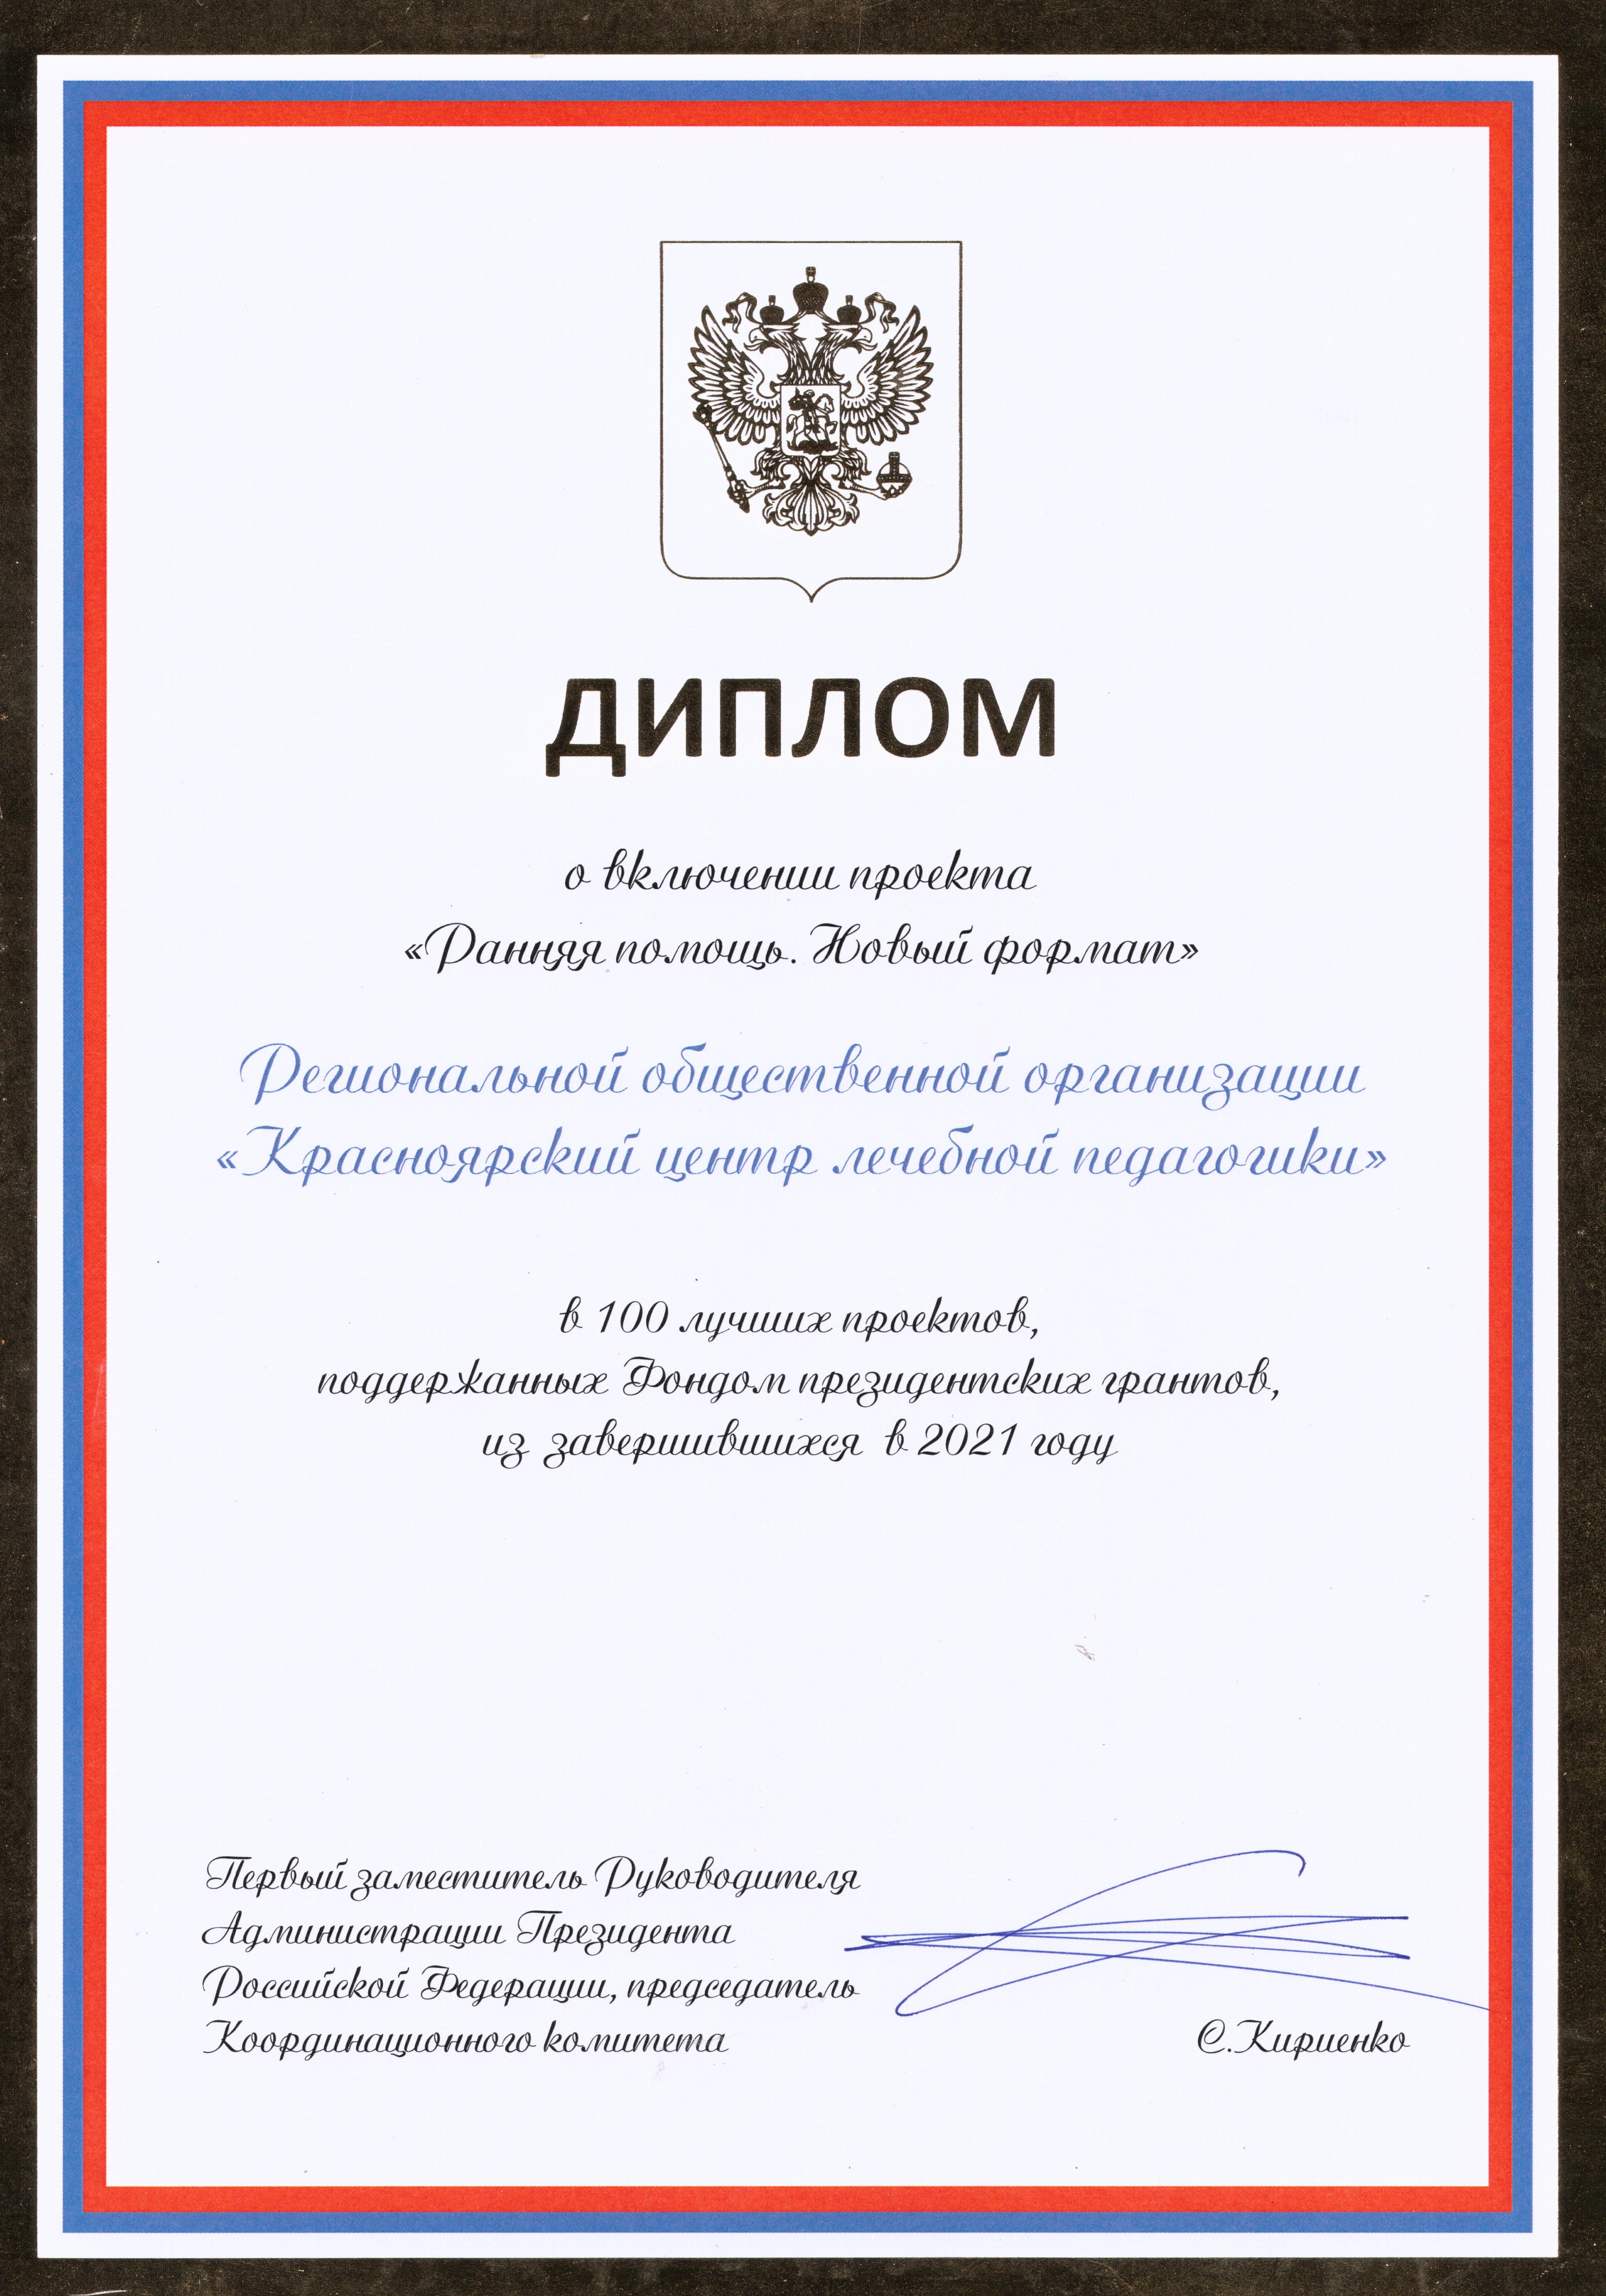 Диплом Топ - 100 С. Кириенко 2021